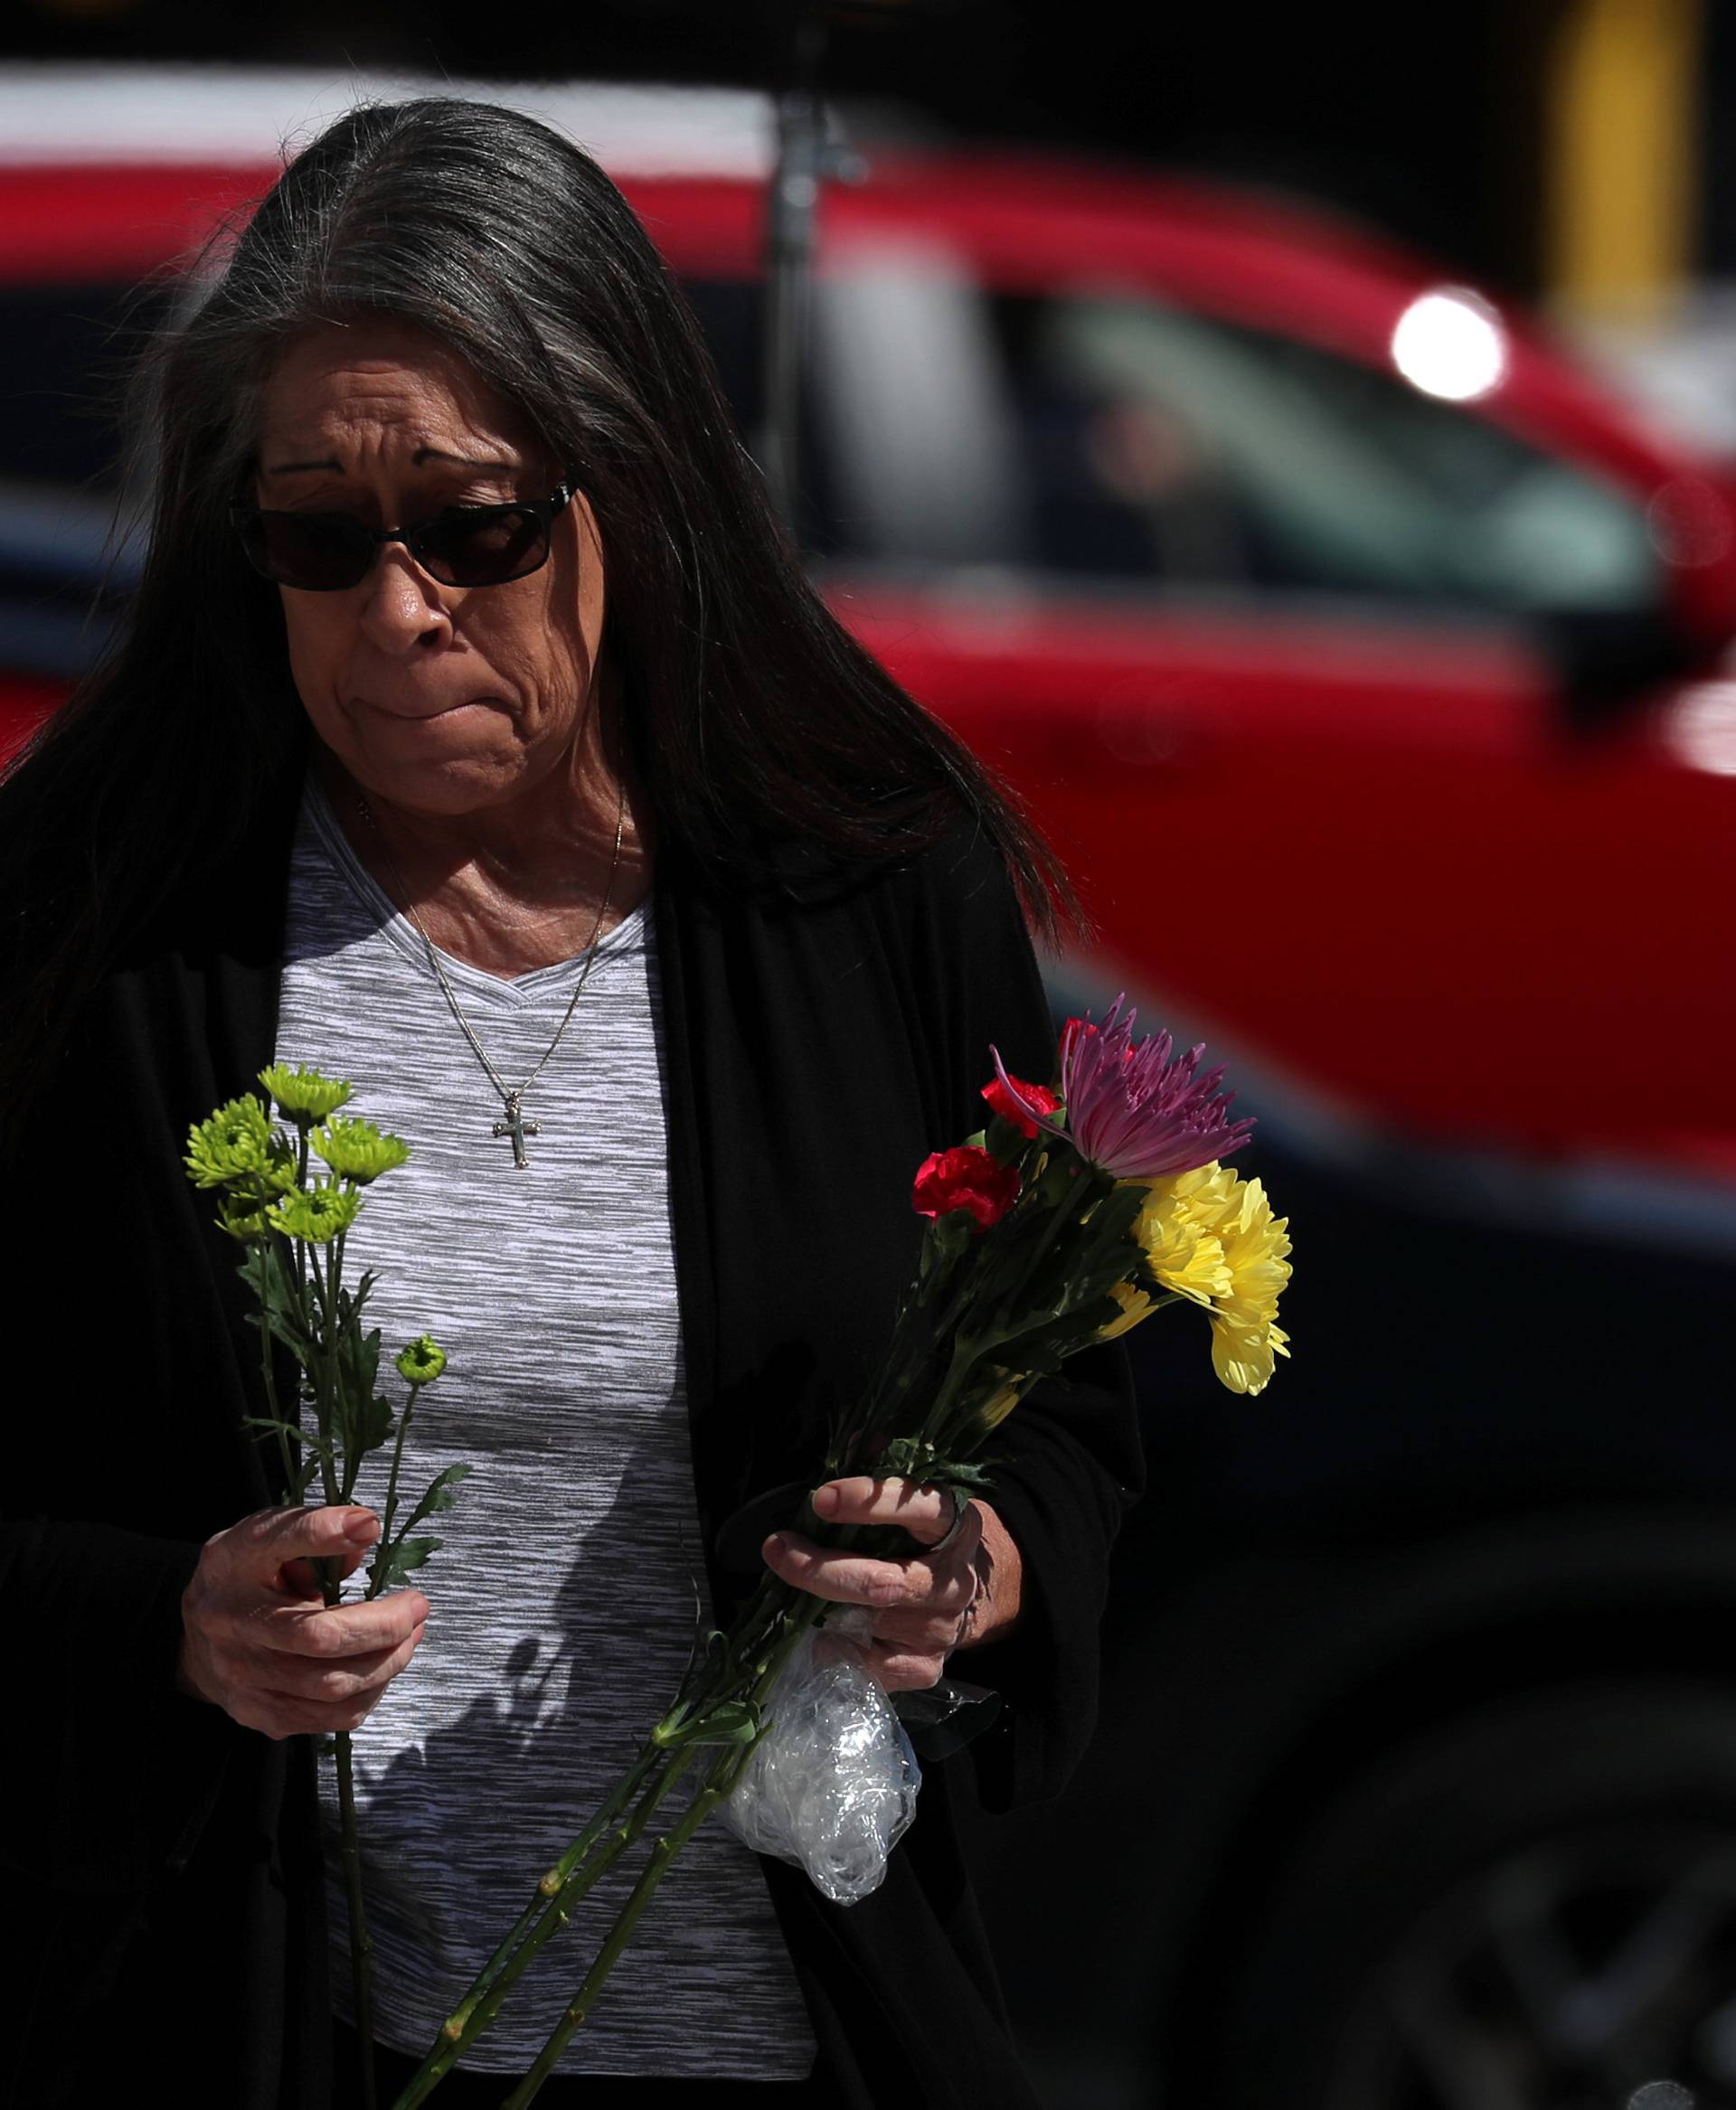 A woman leaves flowers at a makeshift memorial along Las Vegas Boulevard following a mass shooing in Las Vegas